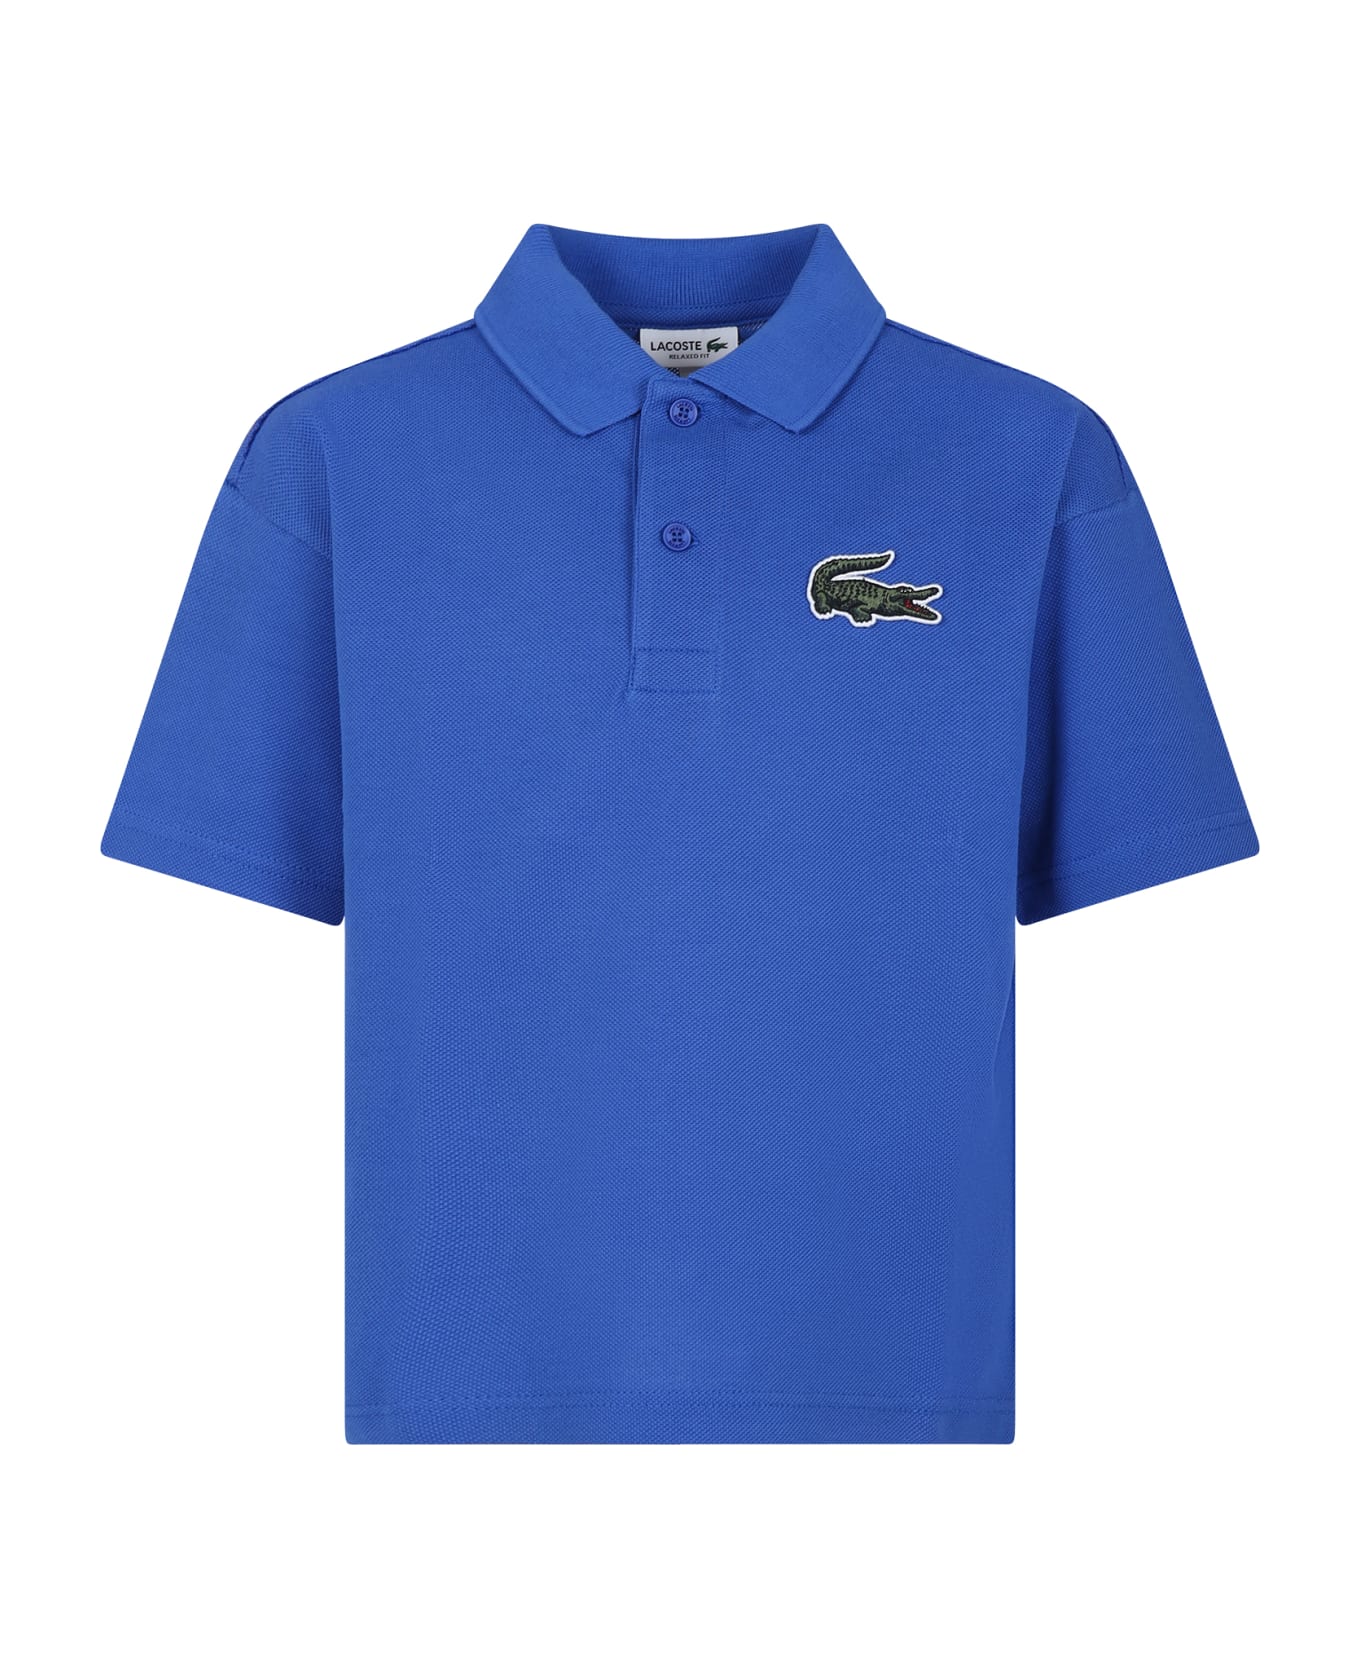 Lacoste Light Blue Polo Shirt For Boy With Crocodile - Light Blue